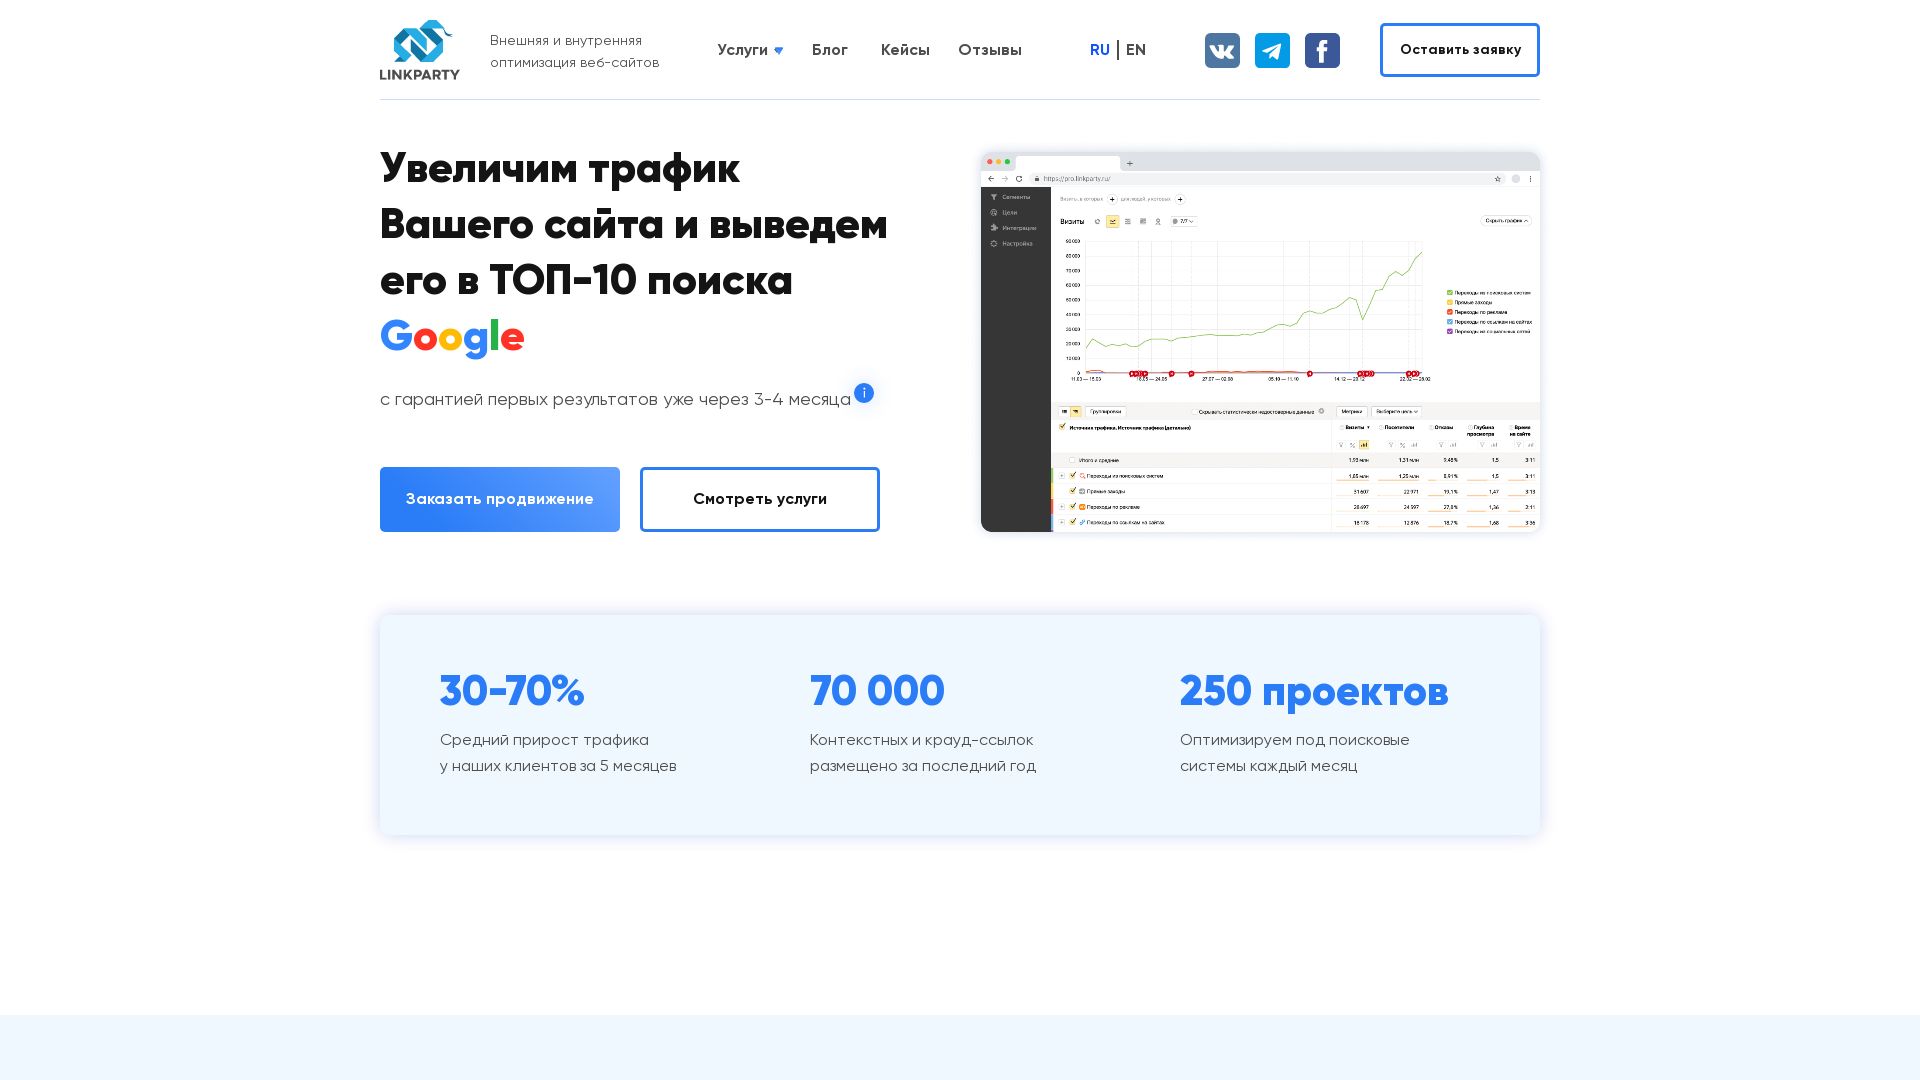 Webseitenstatus linkparty.ru ist   ONLINE